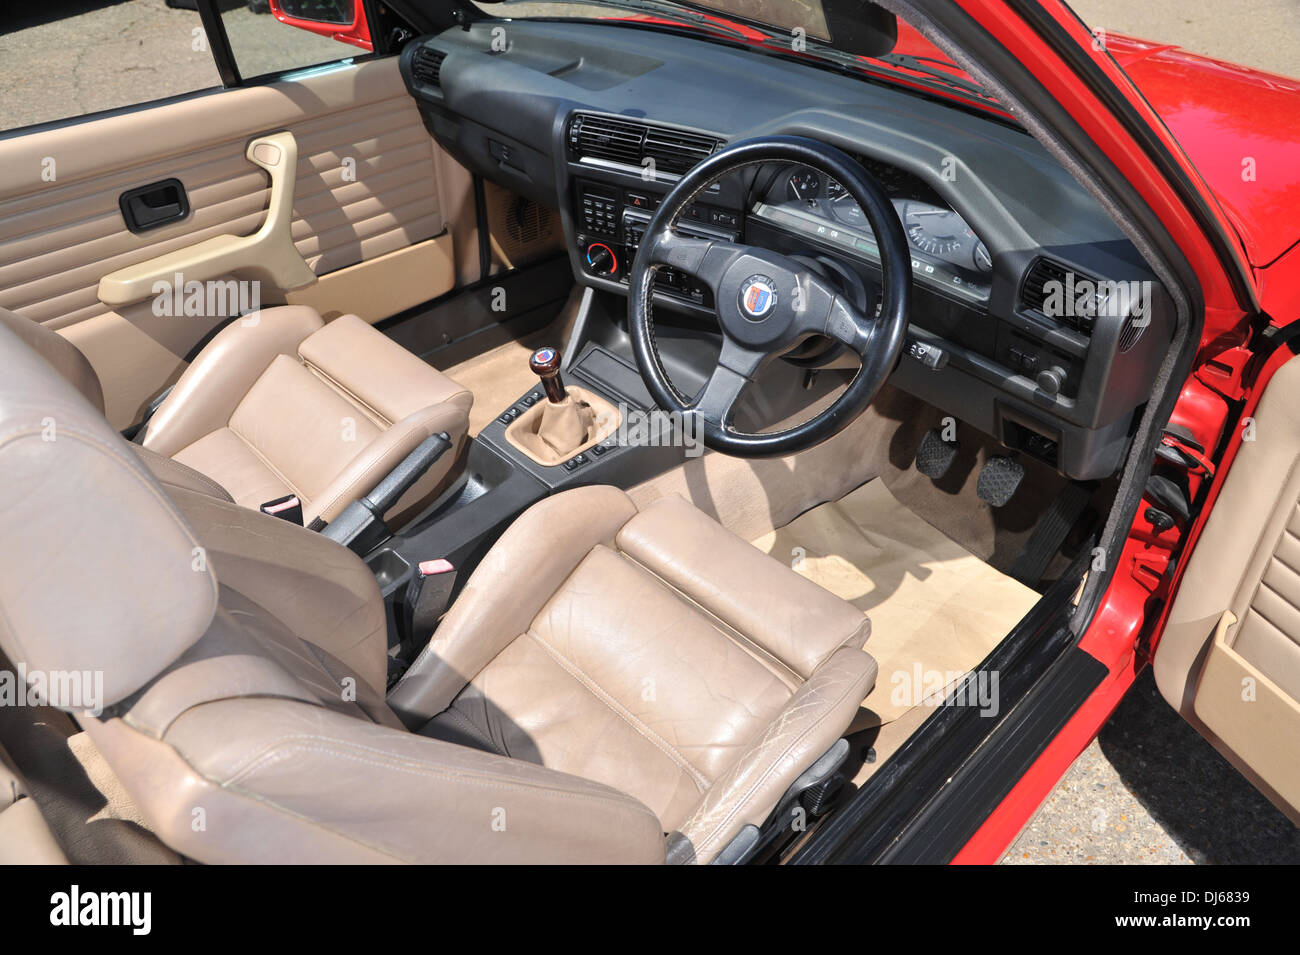 1990 Alpina C2 convertible based on BMW E30 325 German car. Beige leather  interor Stock Photo - Alamy